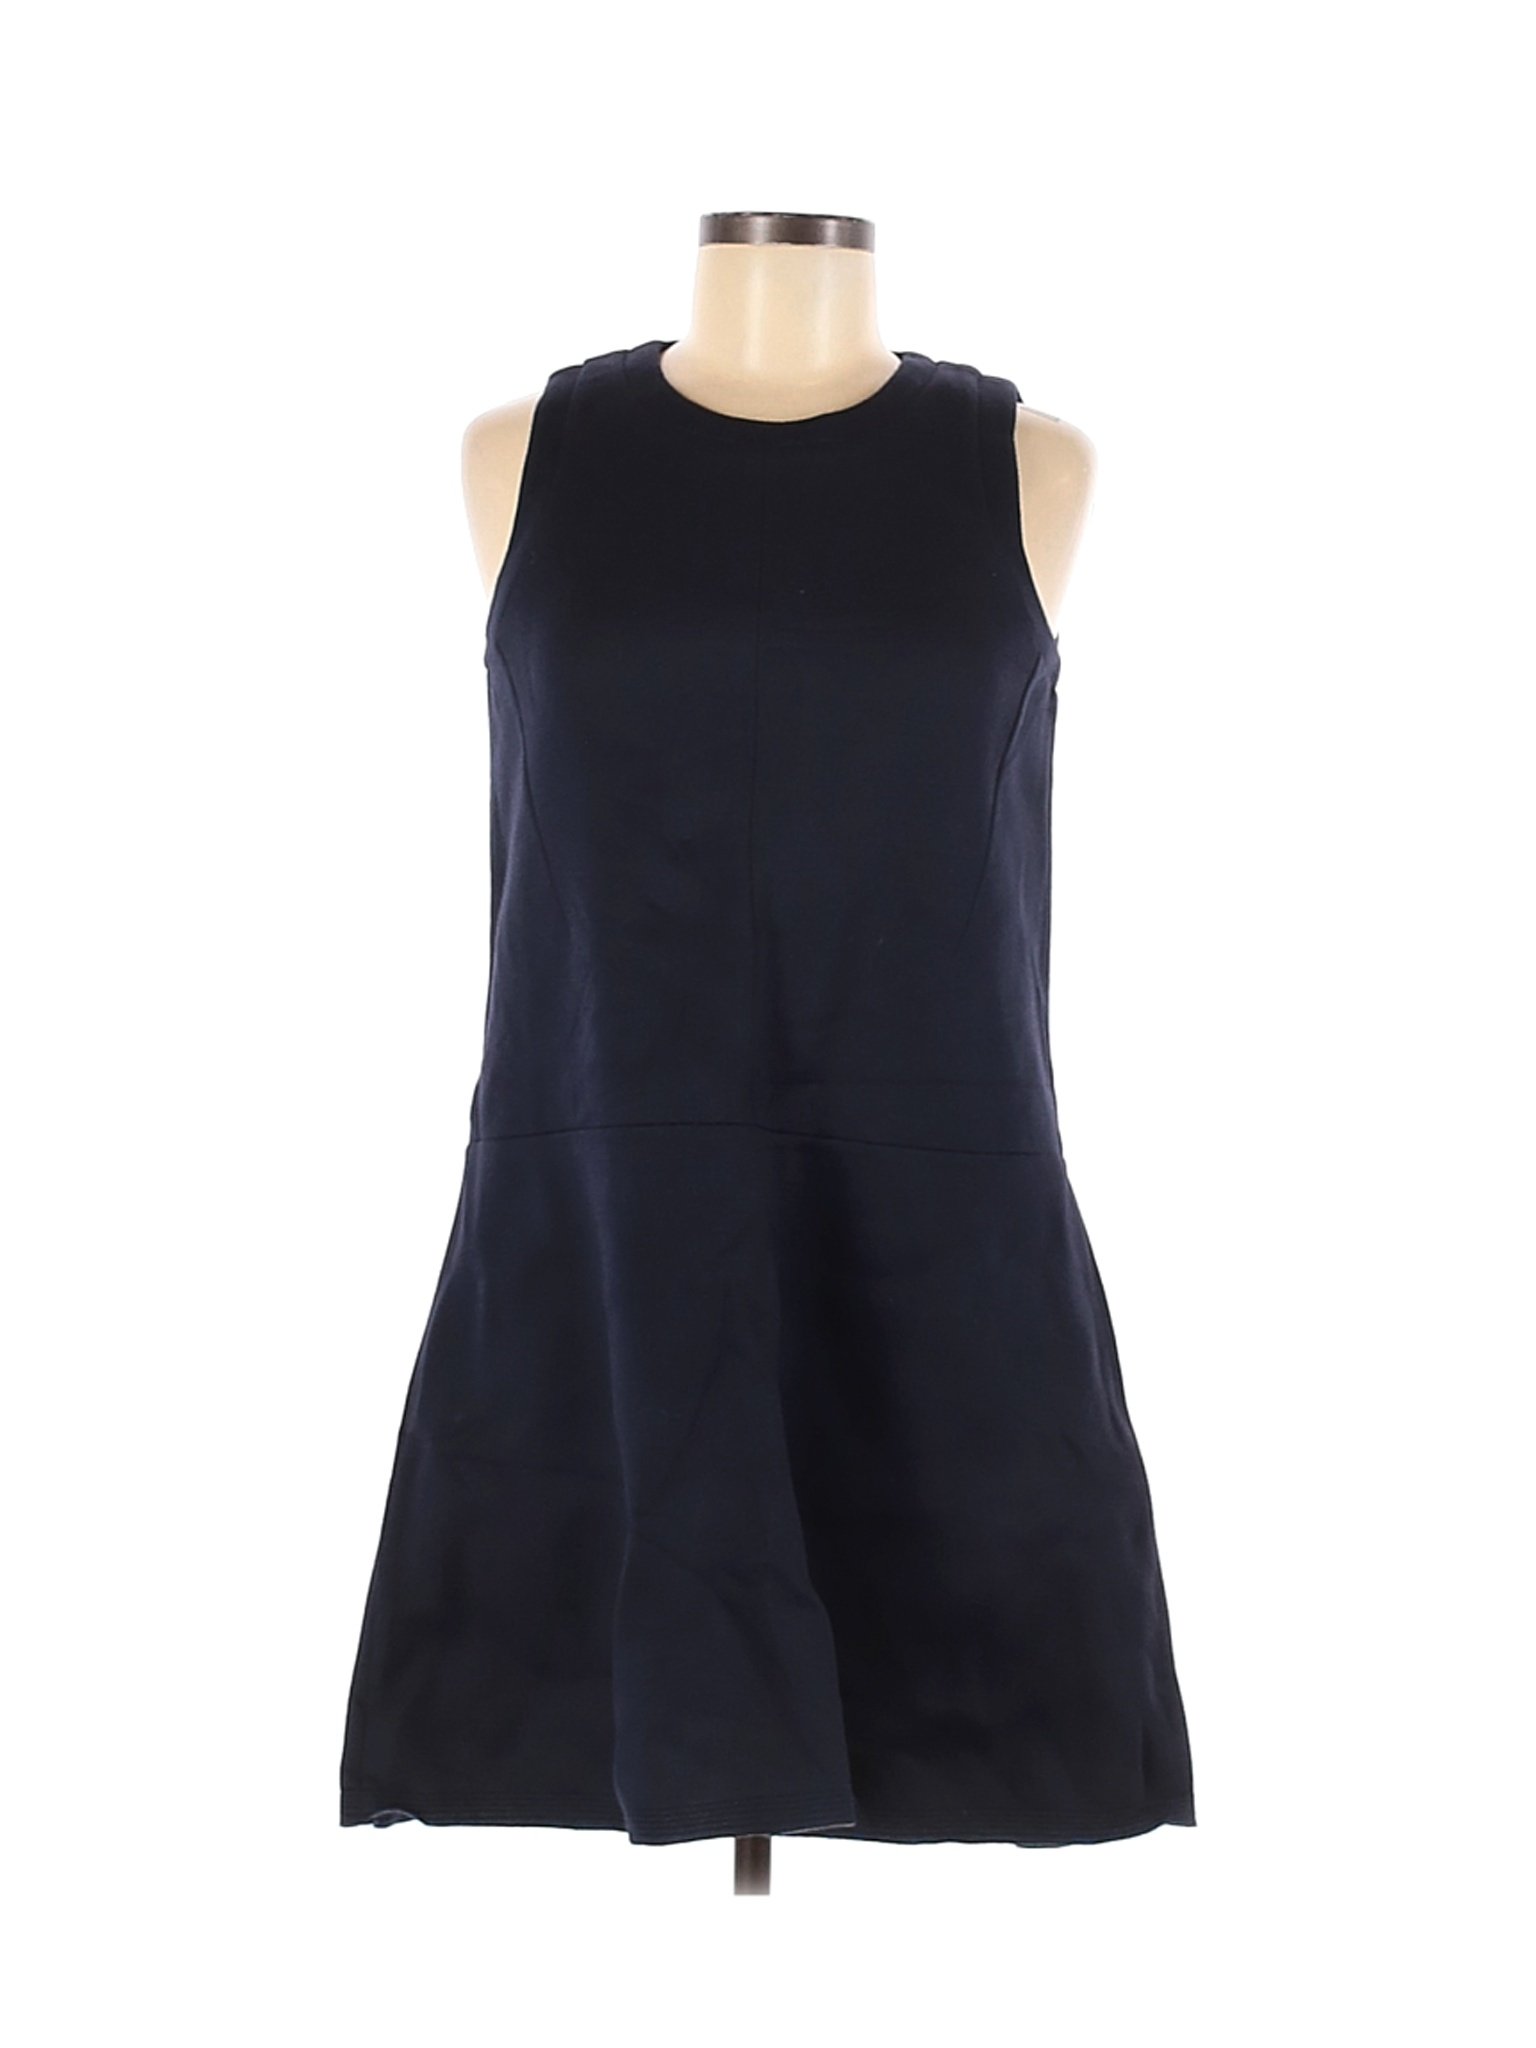 Madewell Women Black Casual Dress S | eBay